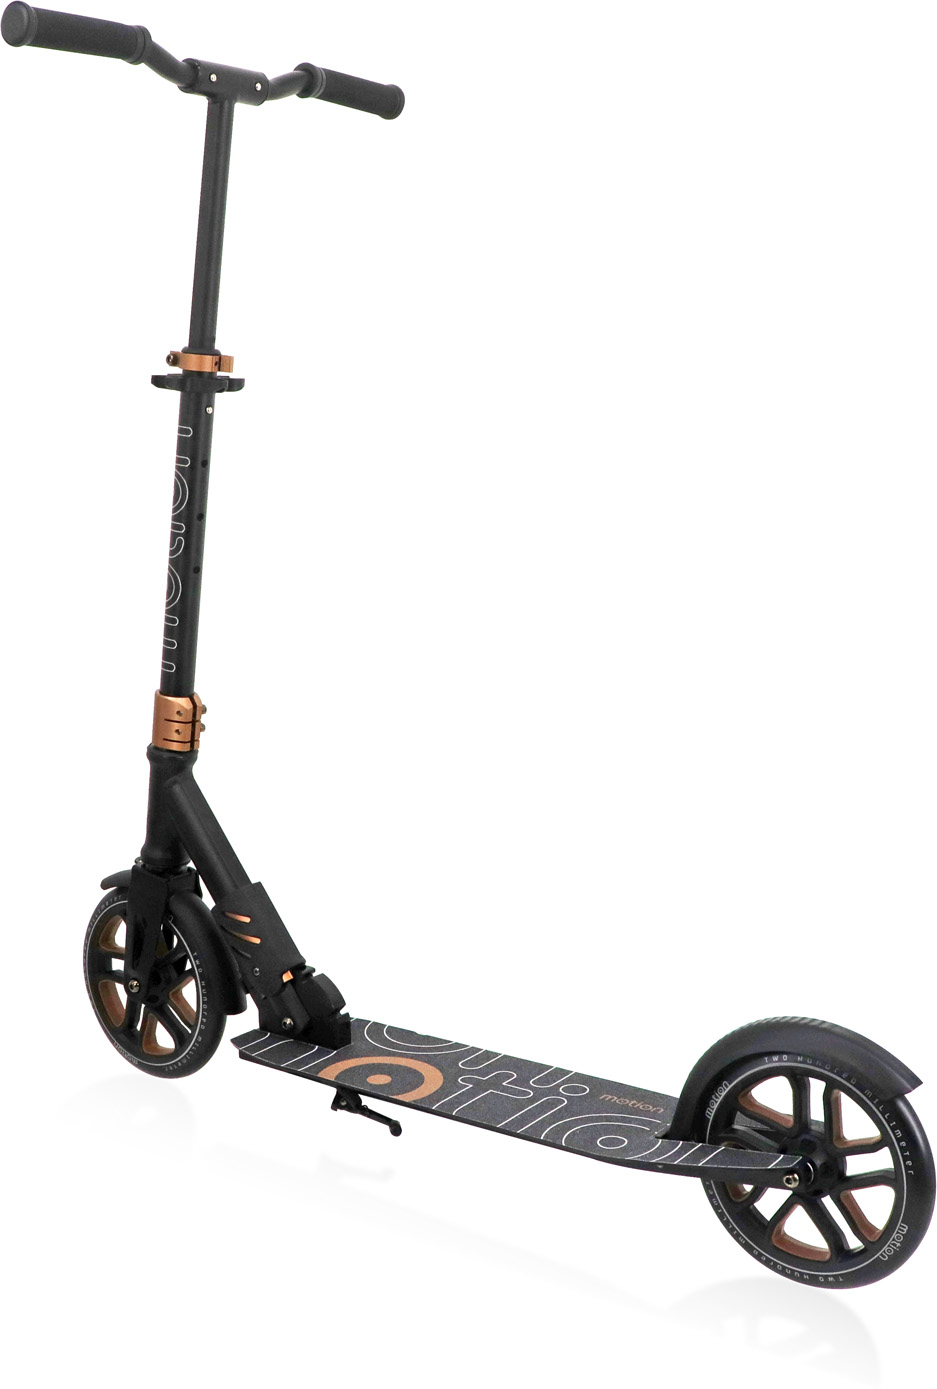 Motion Scooter | Speedy 200mm | Bronze-Black